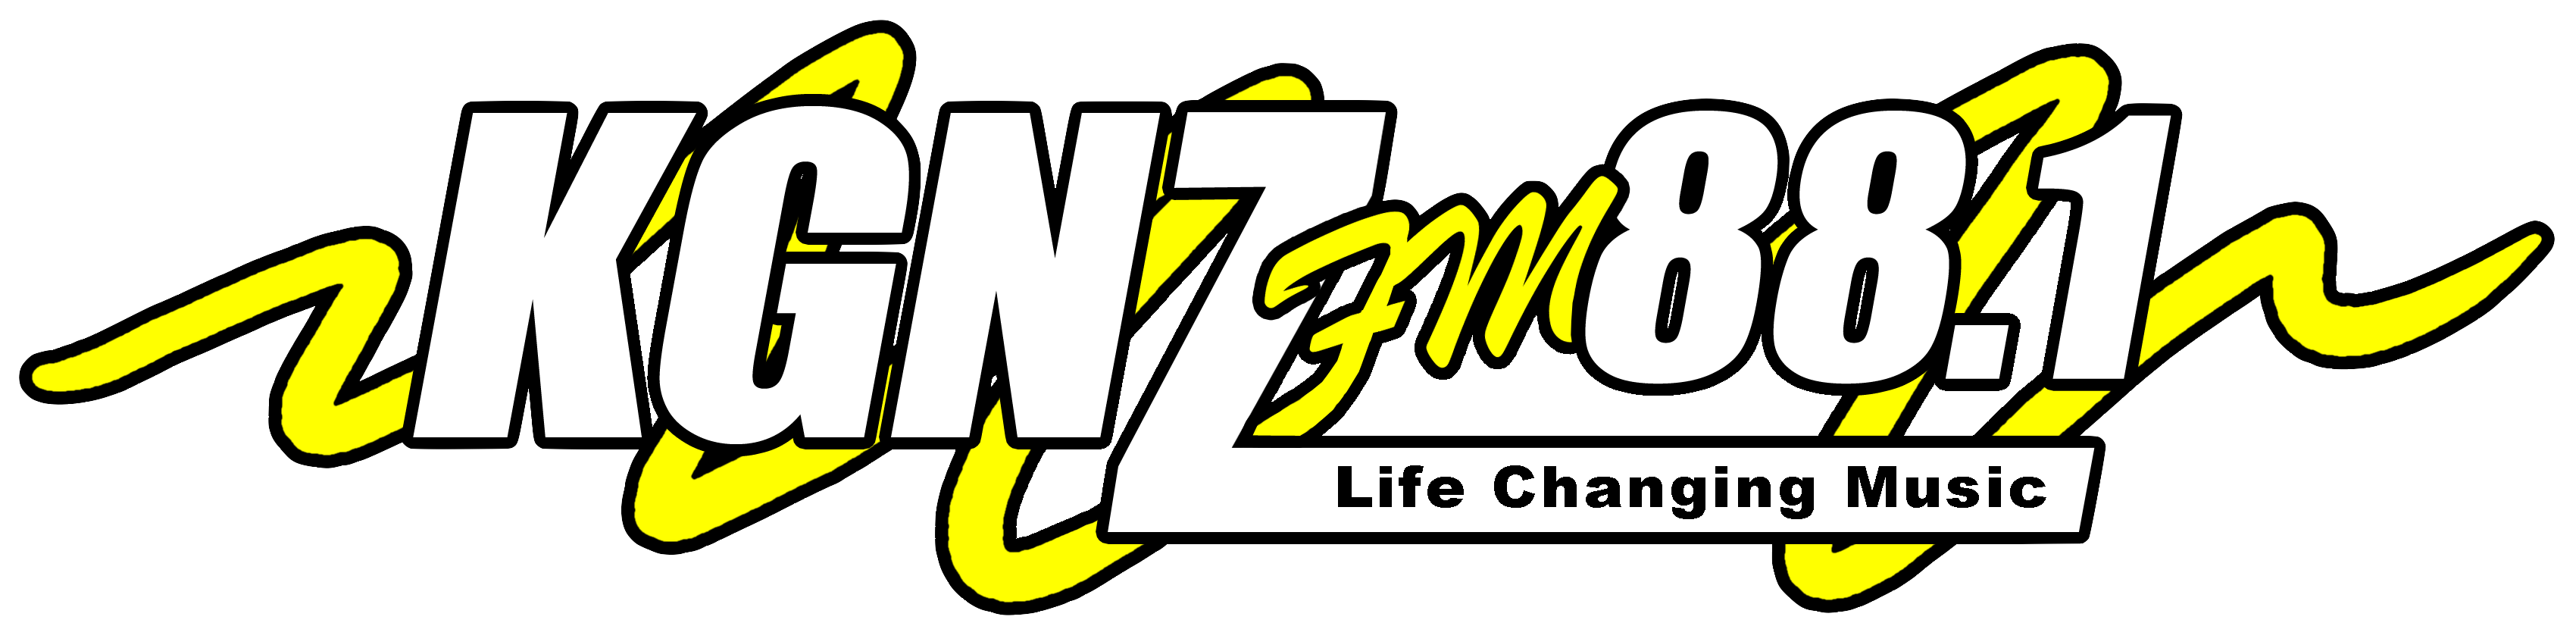 KGNZ 88.1 - Life Changing Radio Abilene, TX